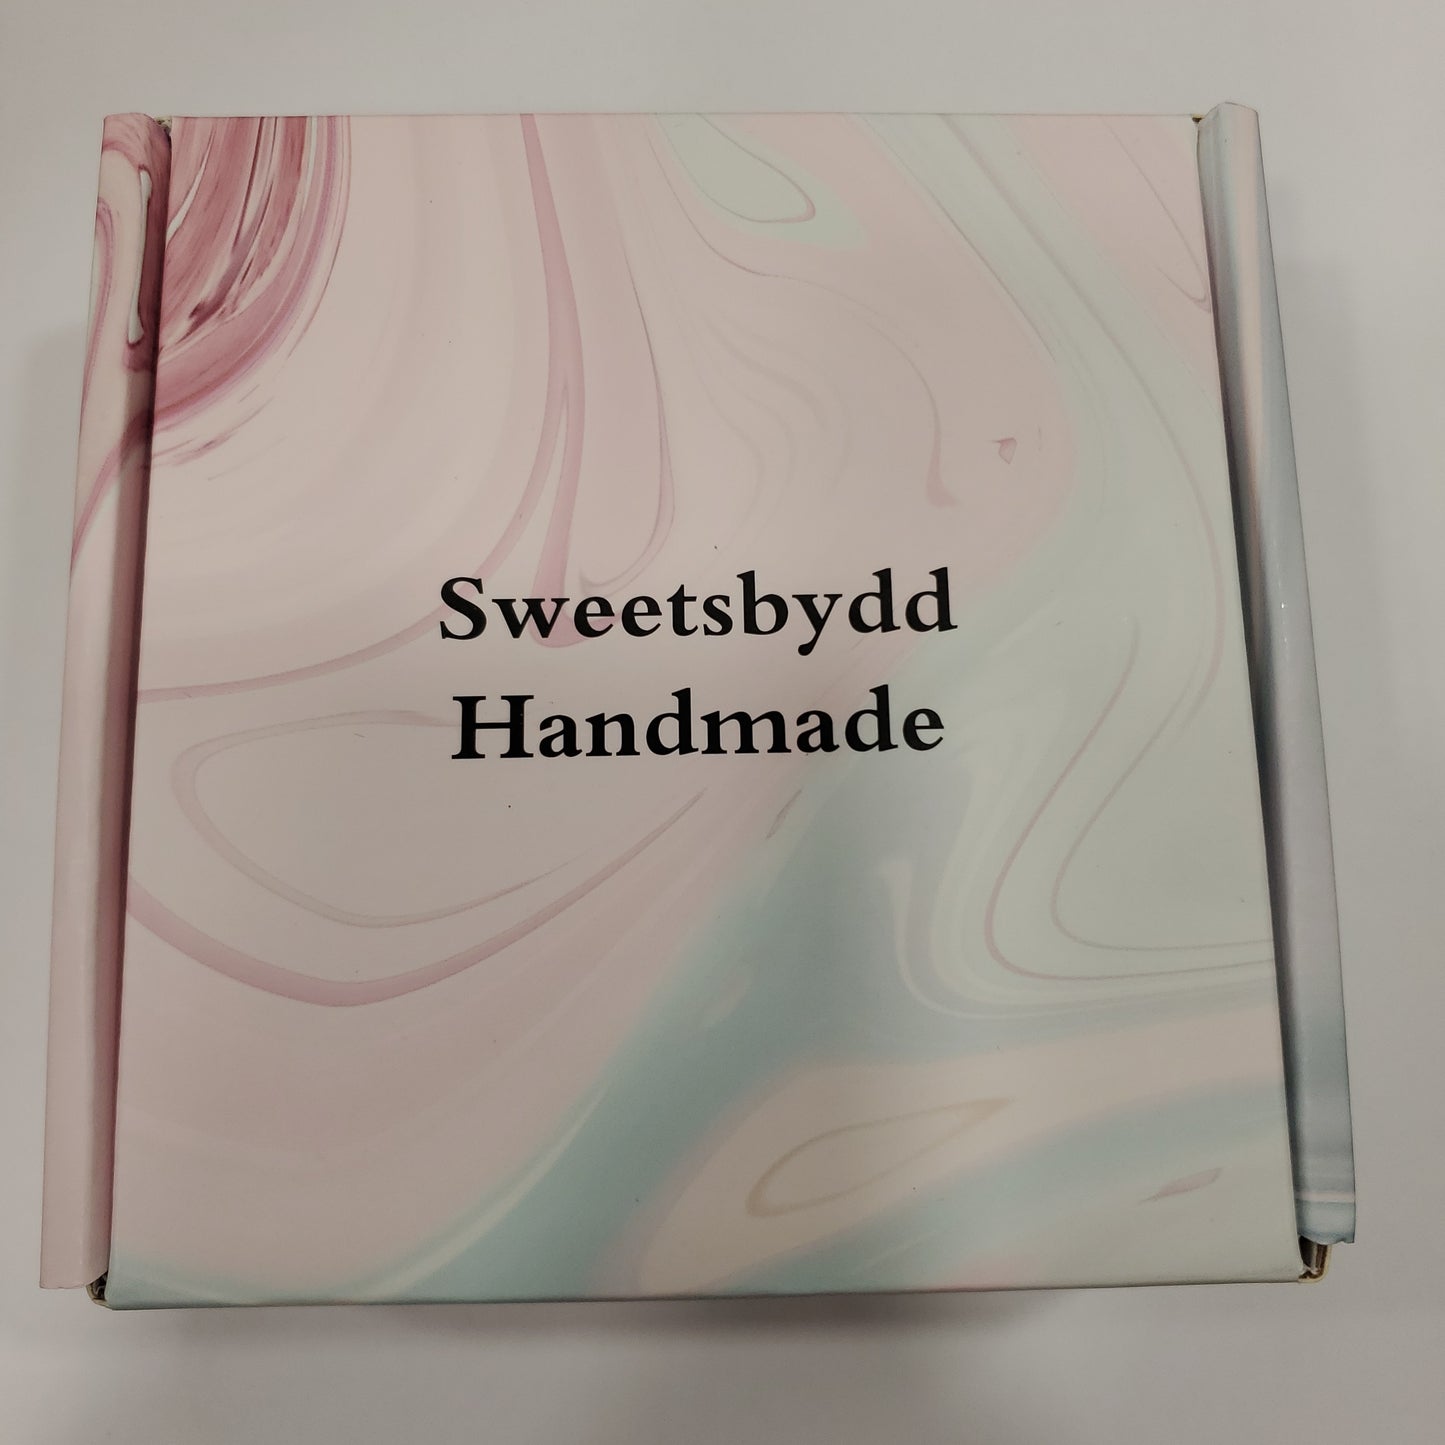 Sweetsbydd Handmade